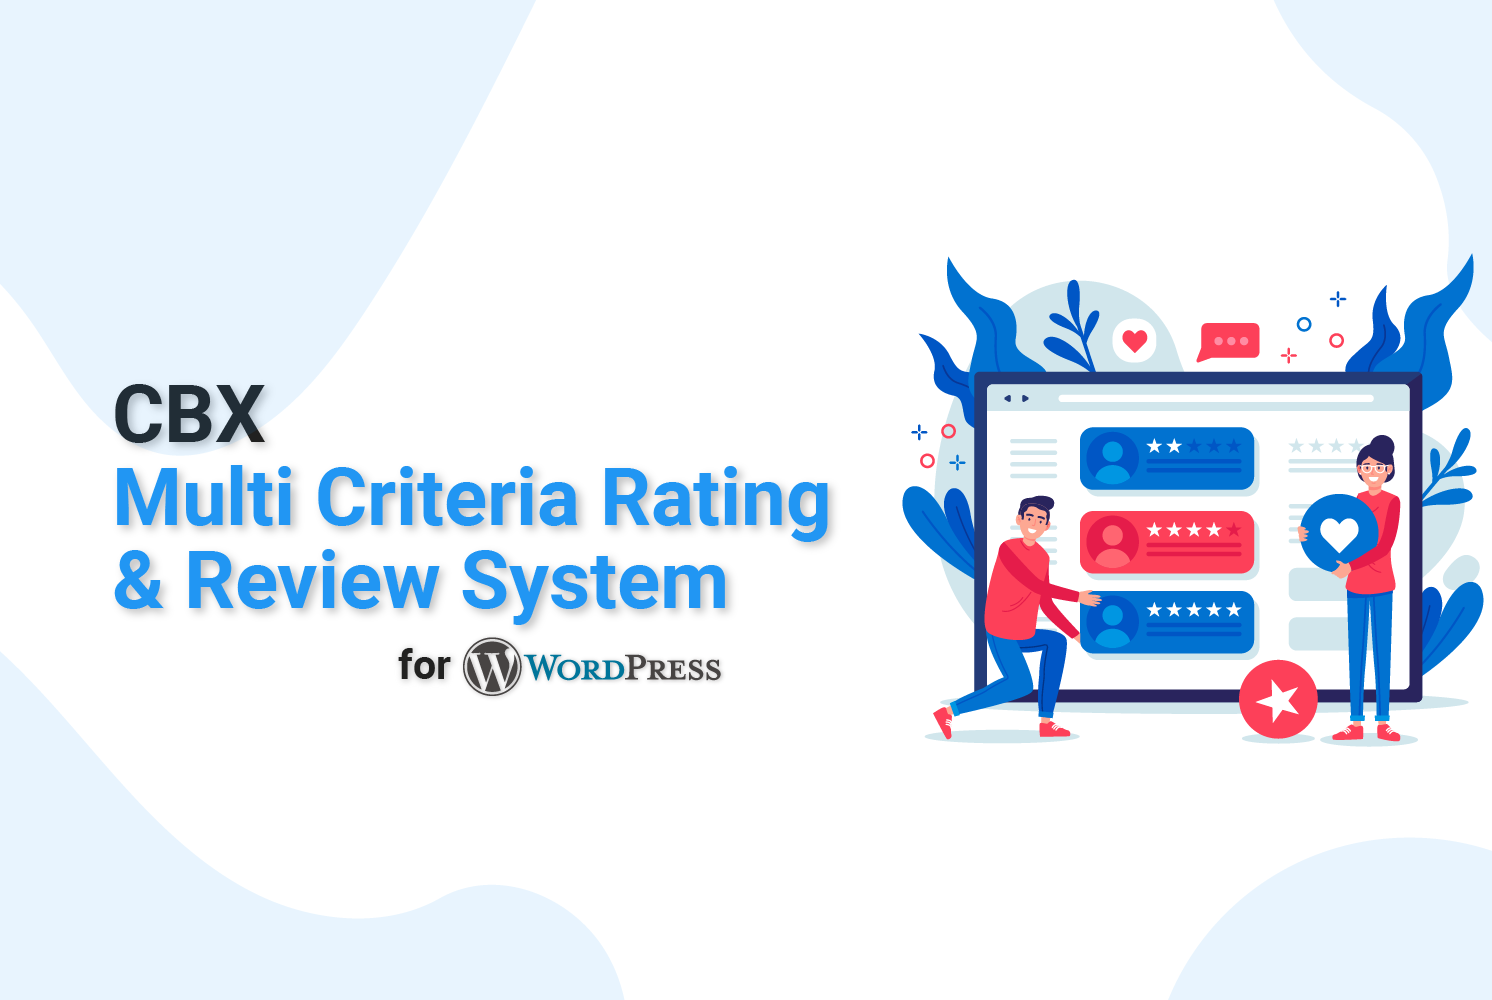 CBX Multi Criteria Rating & Review for WordPress